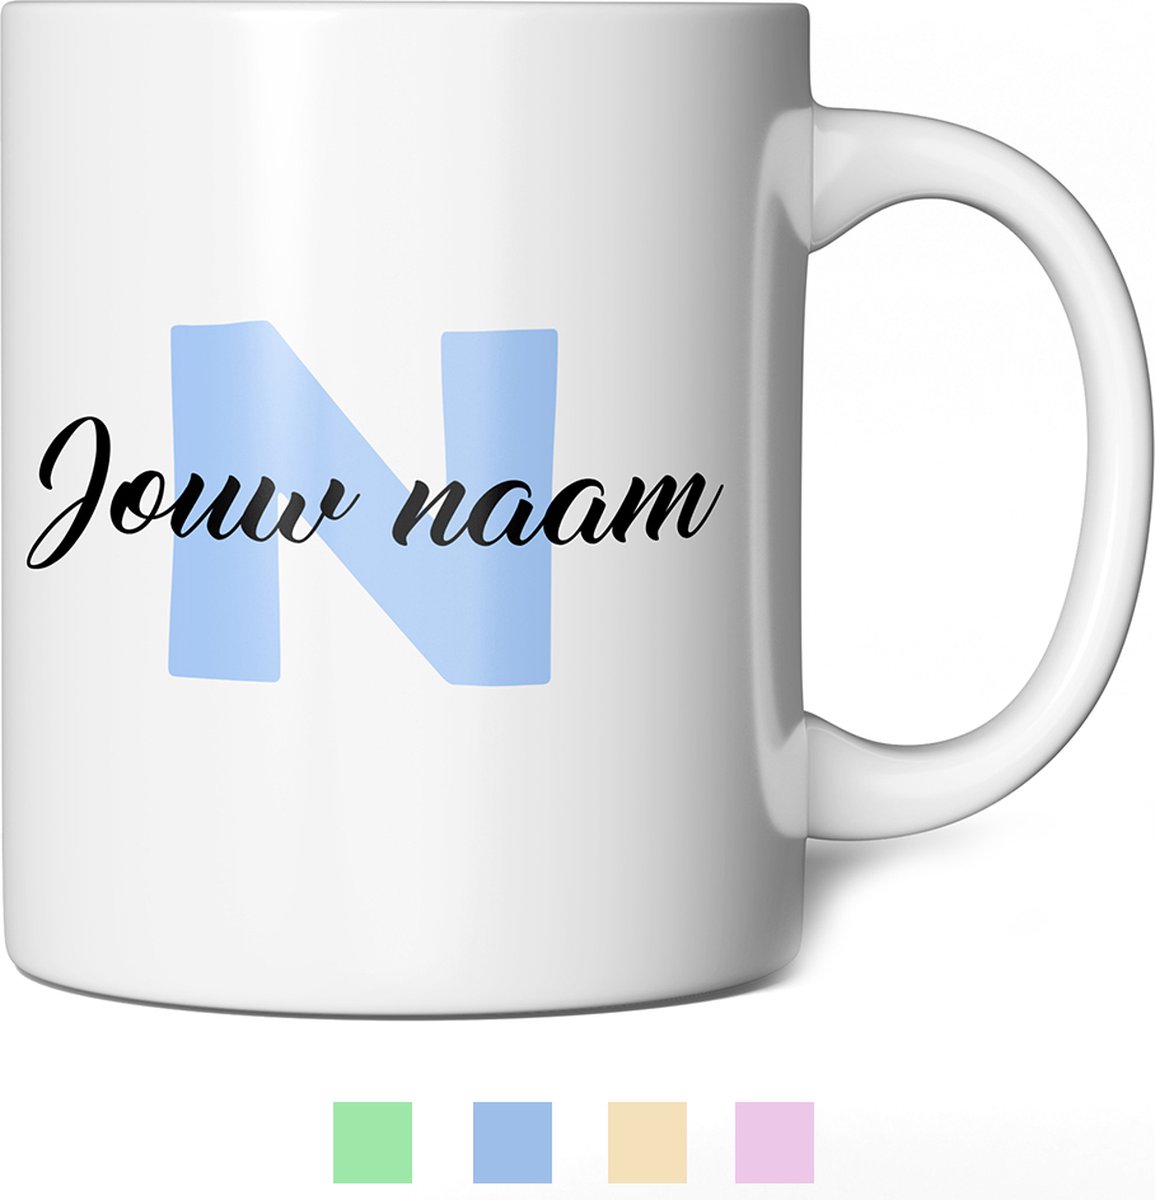 Mok met eigen naam - Blauwe koffiemok - Mokken Beker met naam of tekst - Gepersonaliseerde mok - Mokken set - 350ml